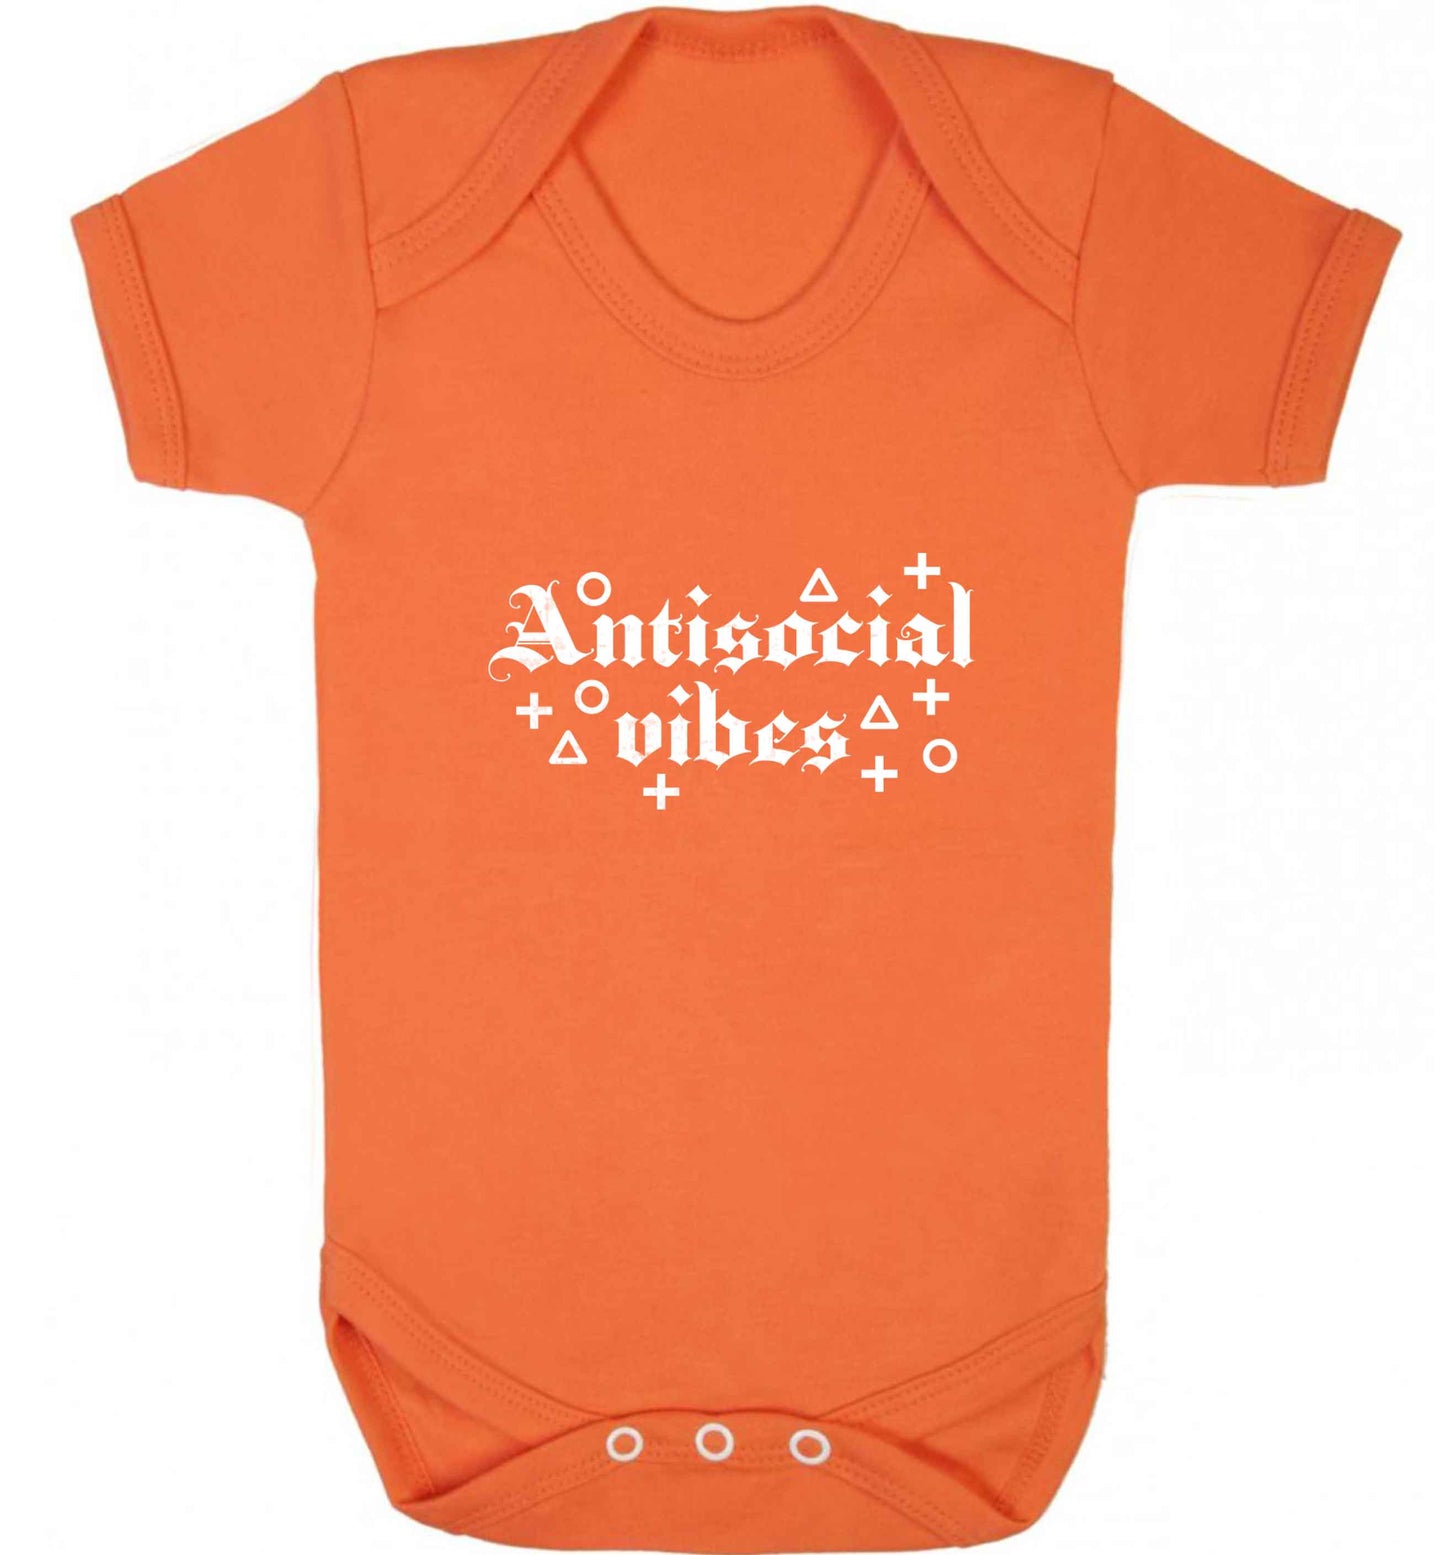 Antisocial vibes baby vest orange 18-24 months